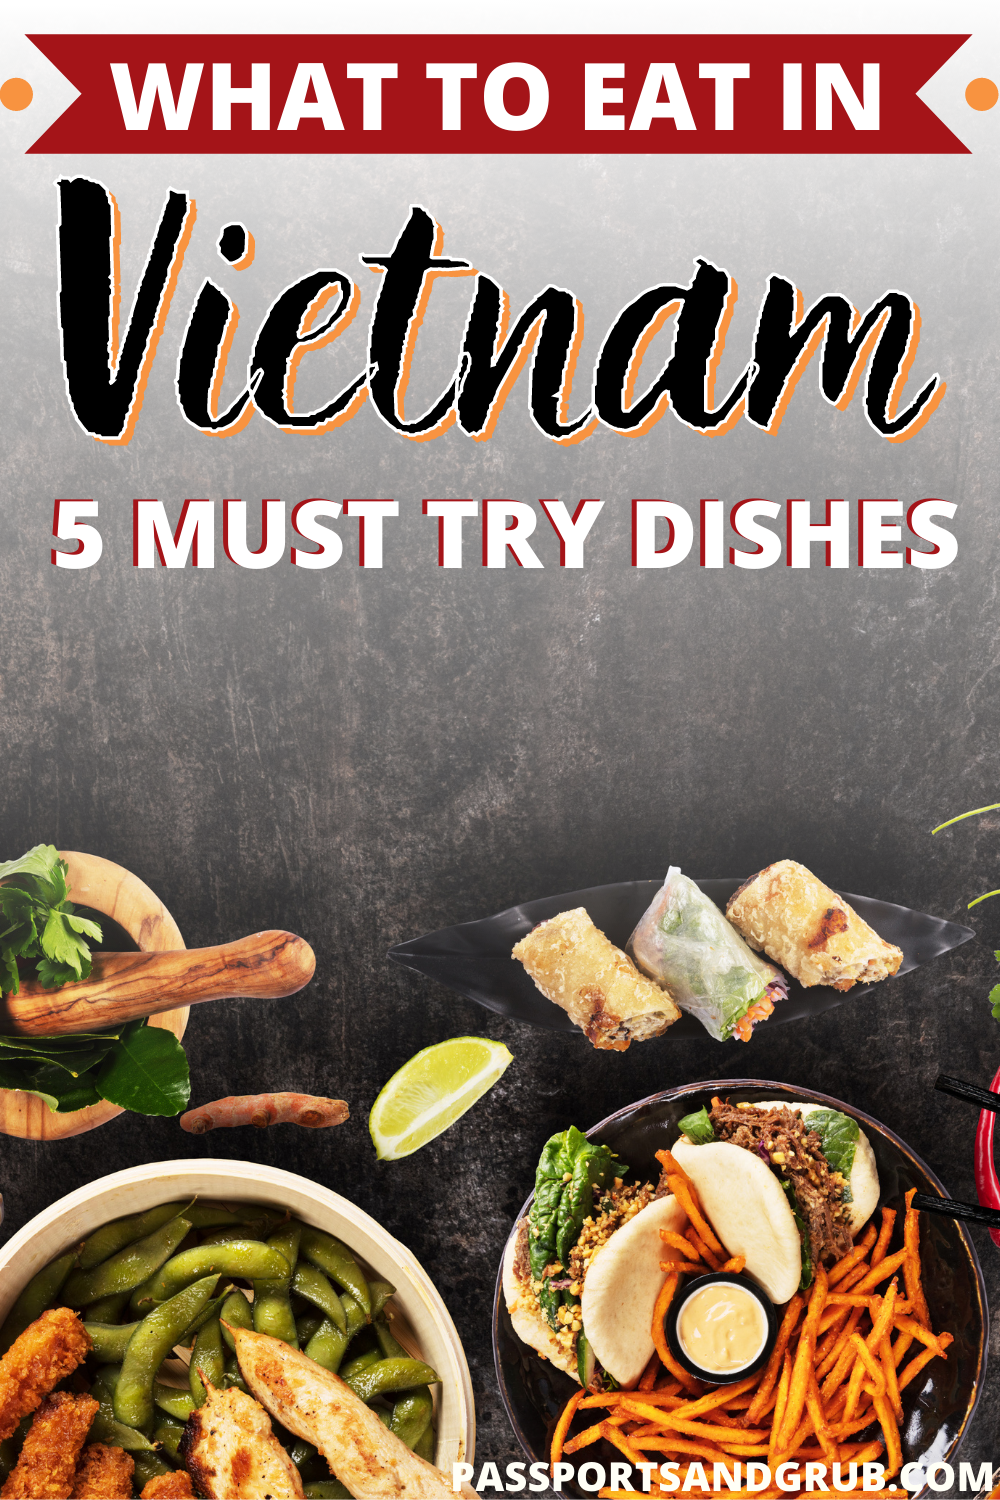 Wgat ti eat ub Vietnam